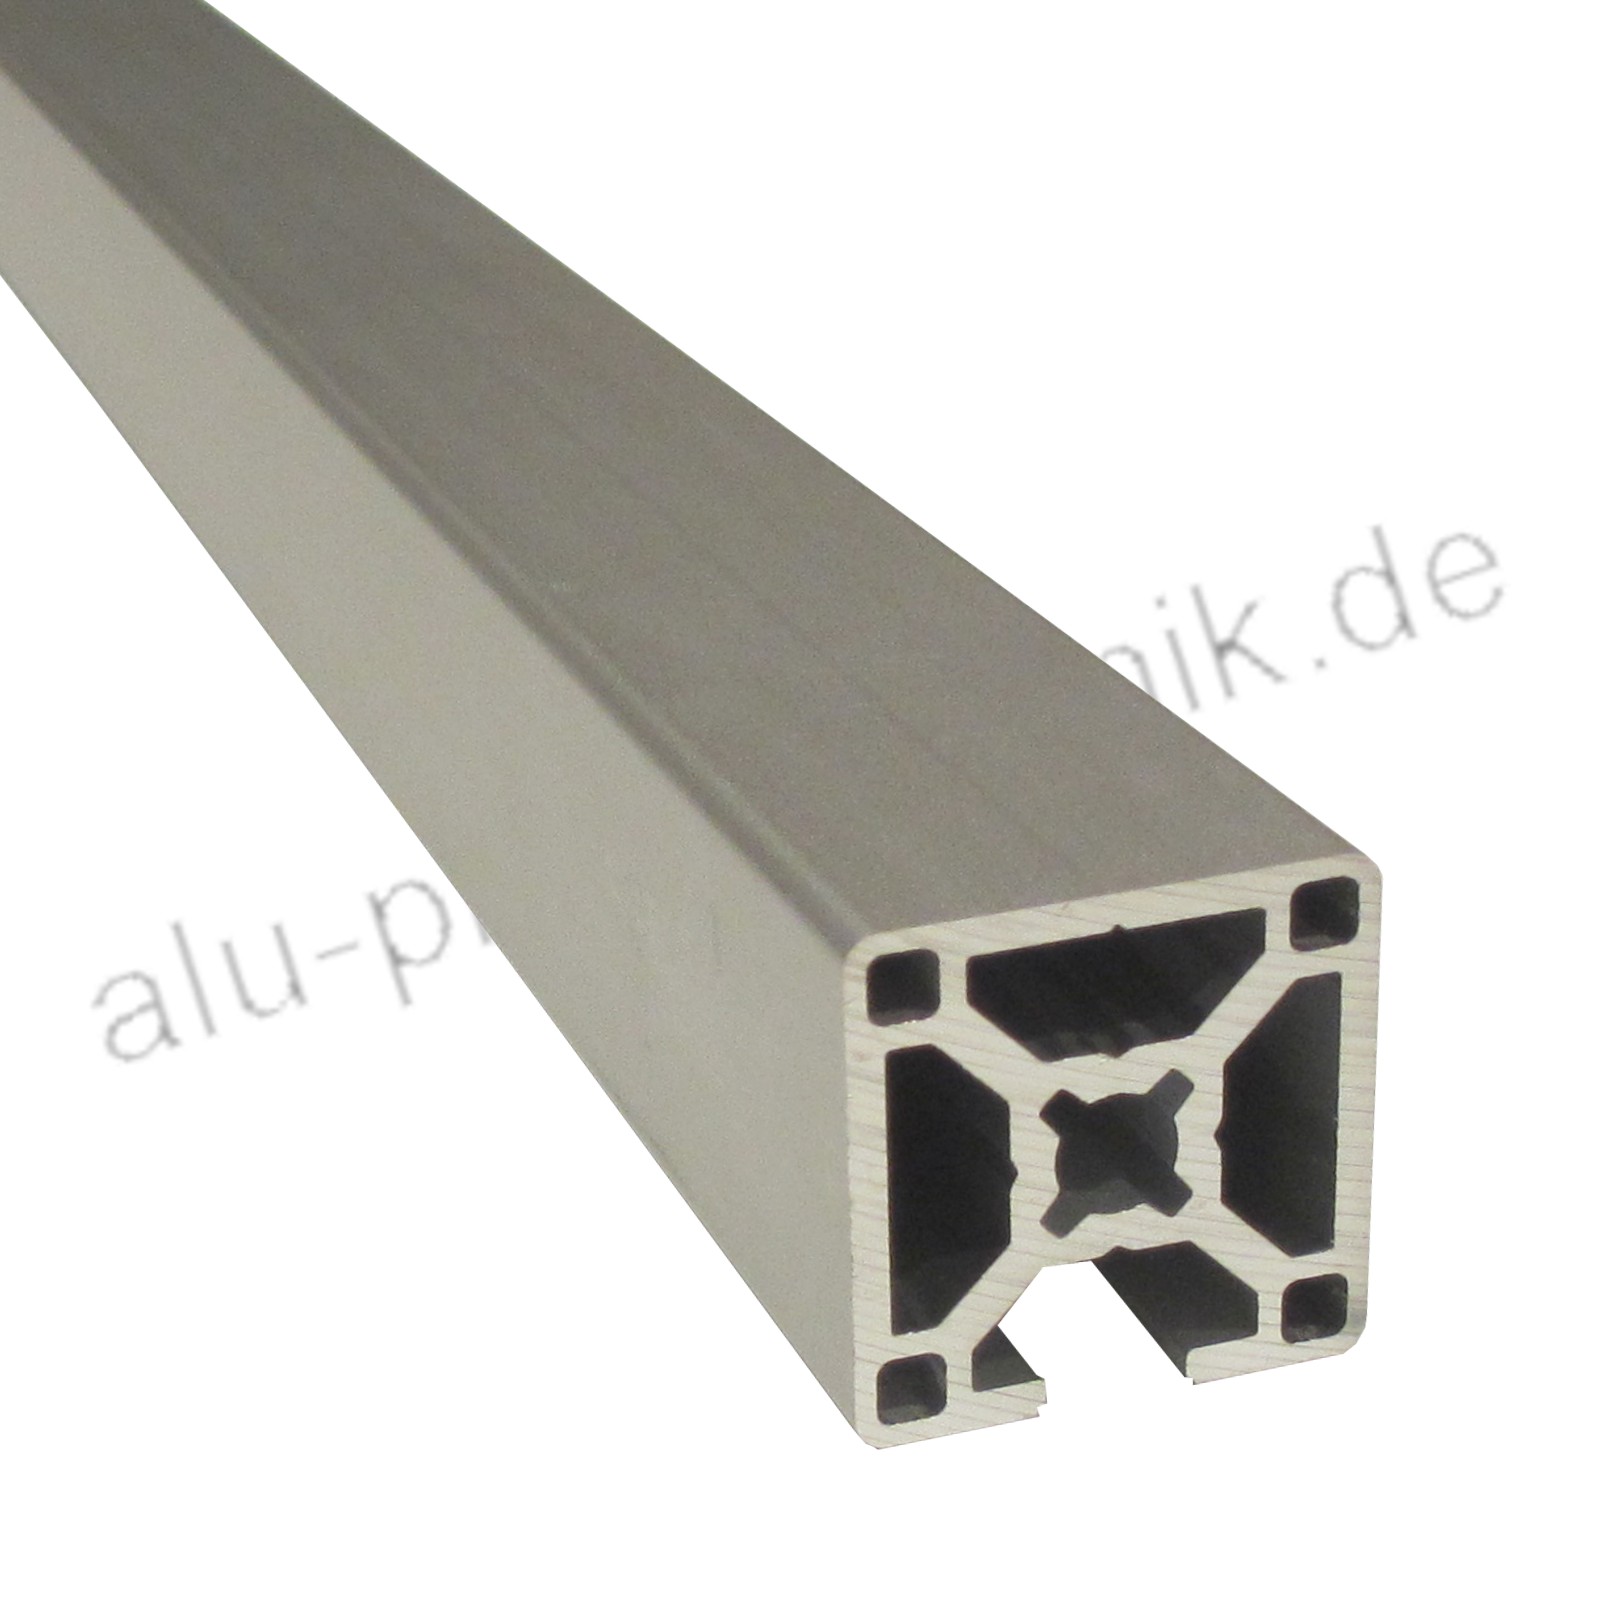 Aluminiumprofil 30x30L 3 Nuten verdeckt B-Typ Nut 8 ALU Profil bis 2m Design 